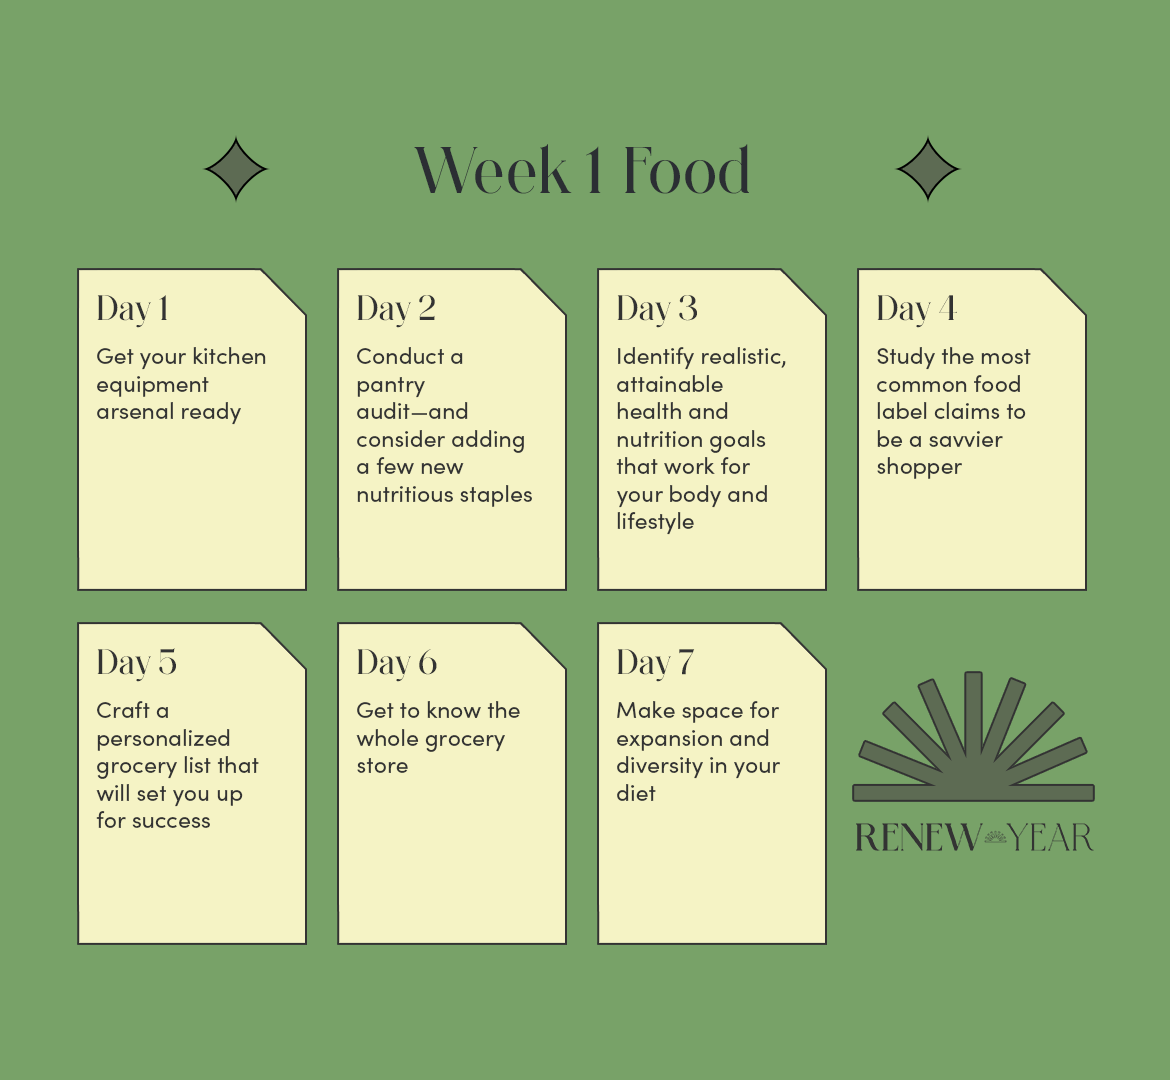 renew year food plan